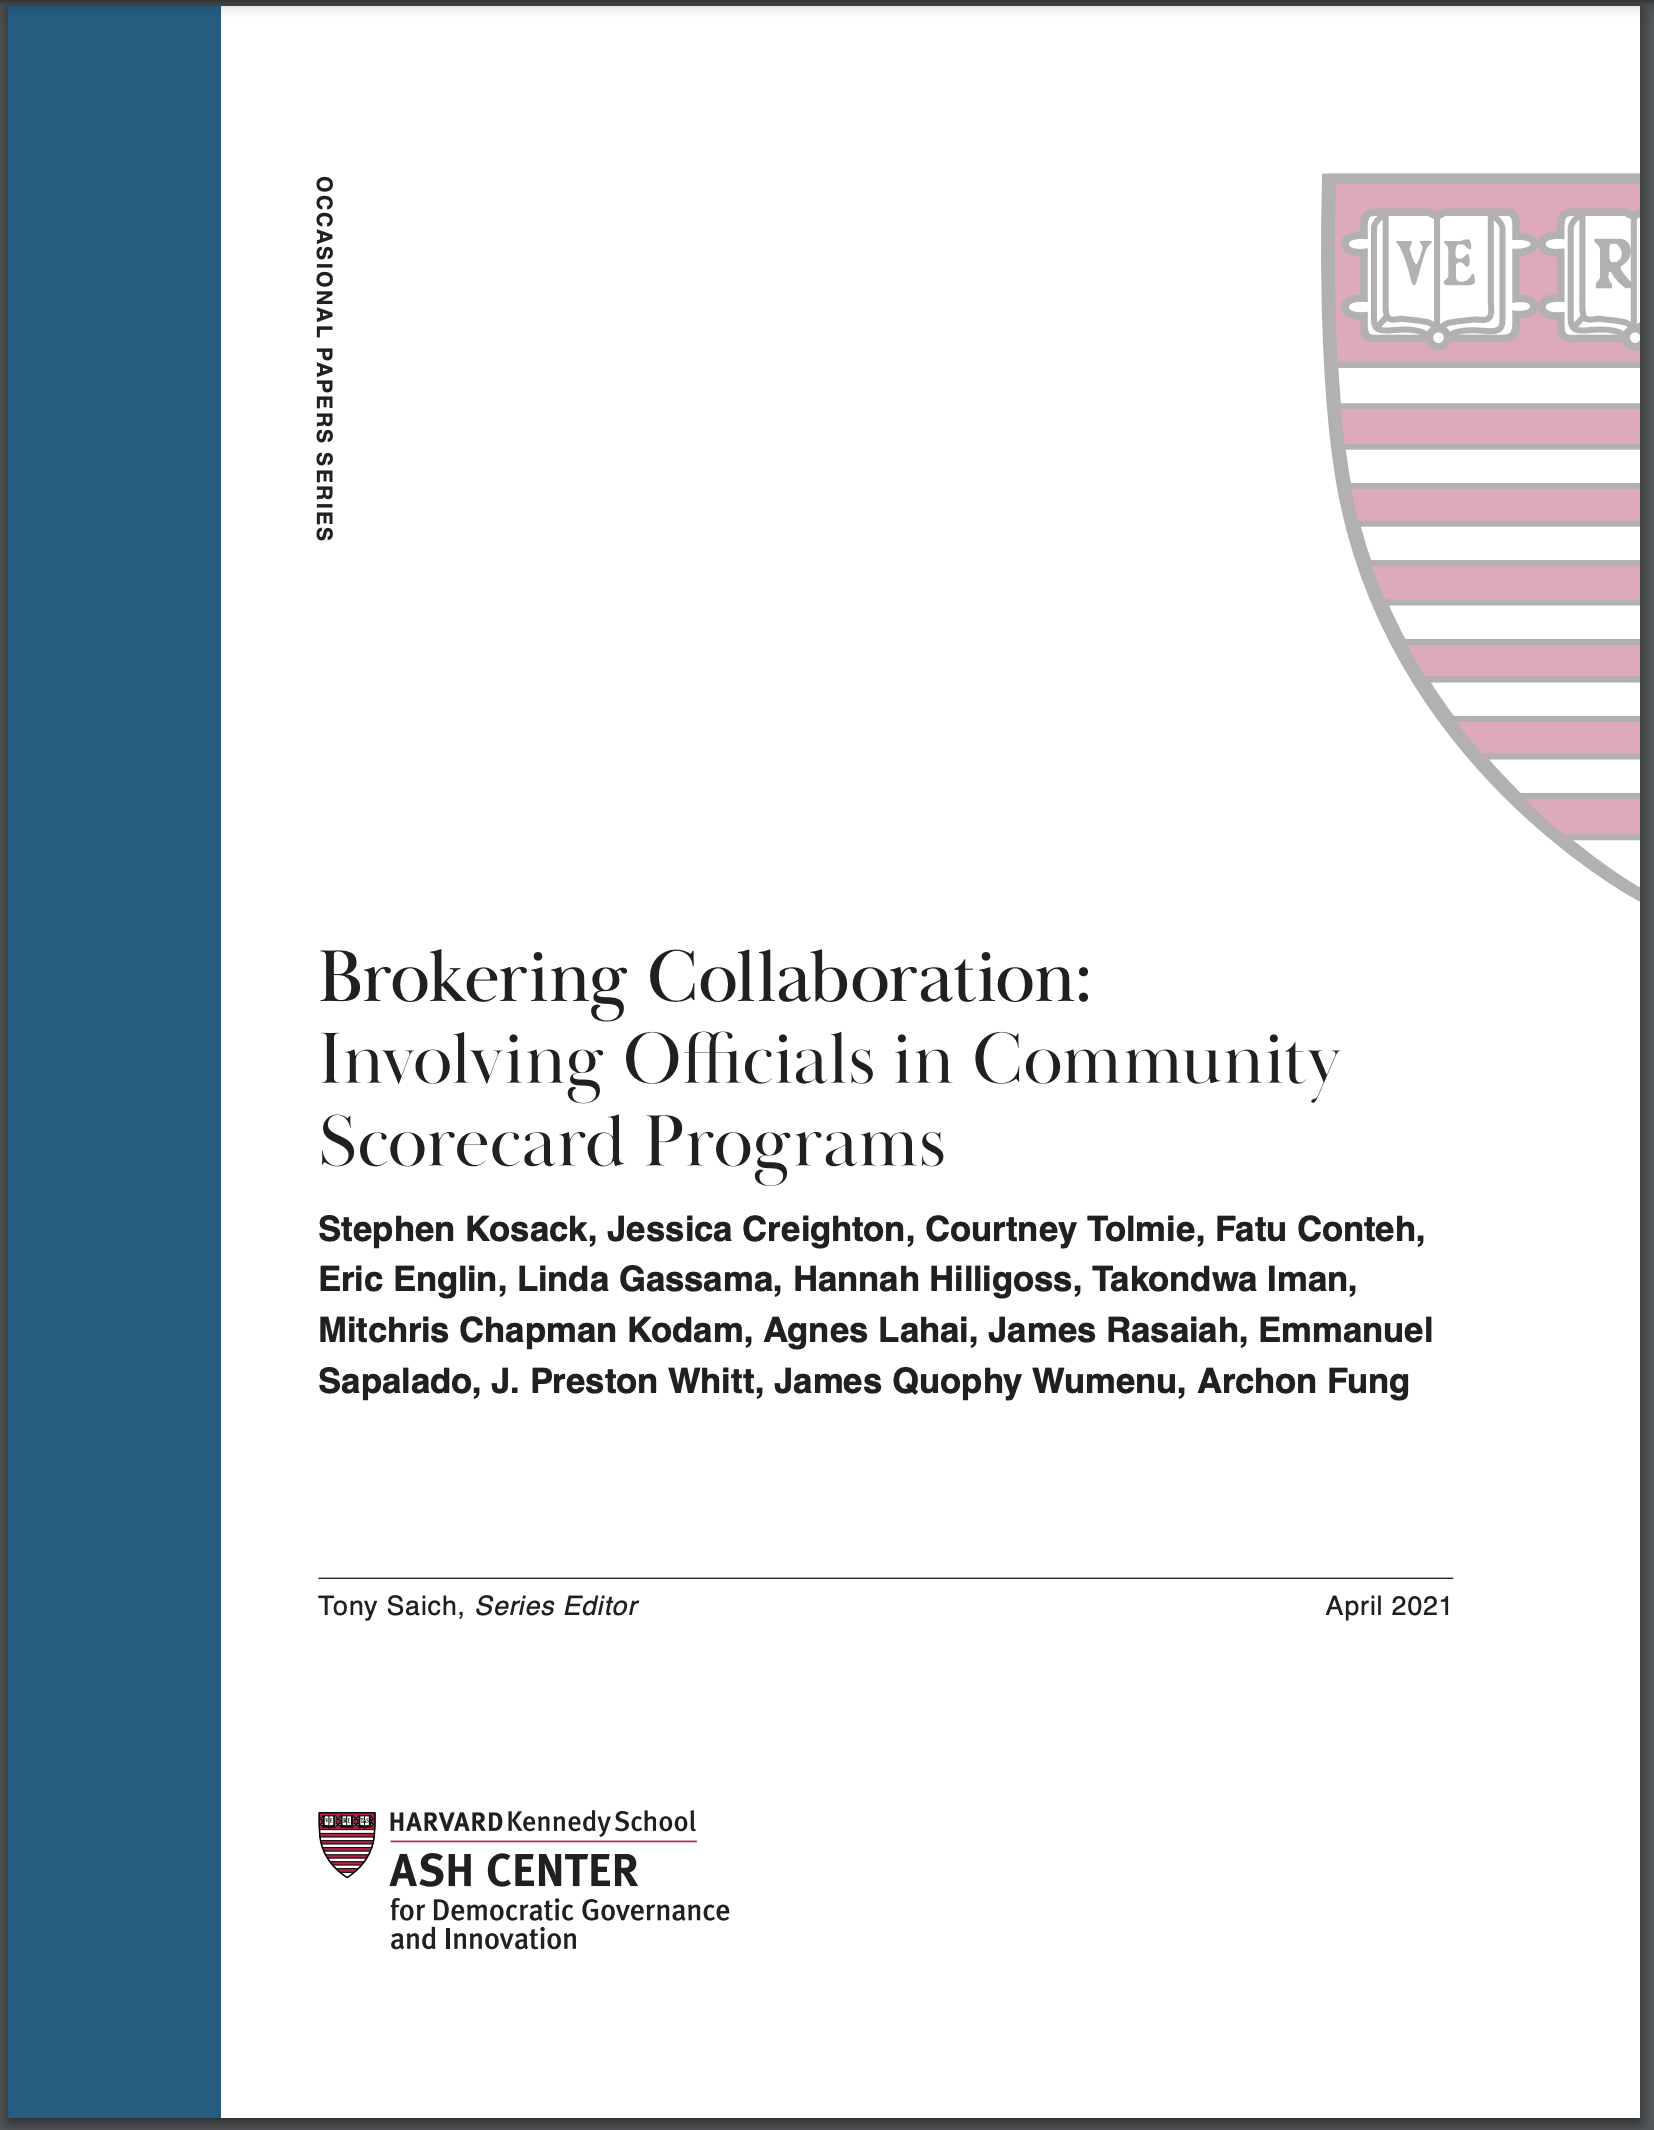 Brokering Collaboration: Involving Officials in Community Scorecard Programs